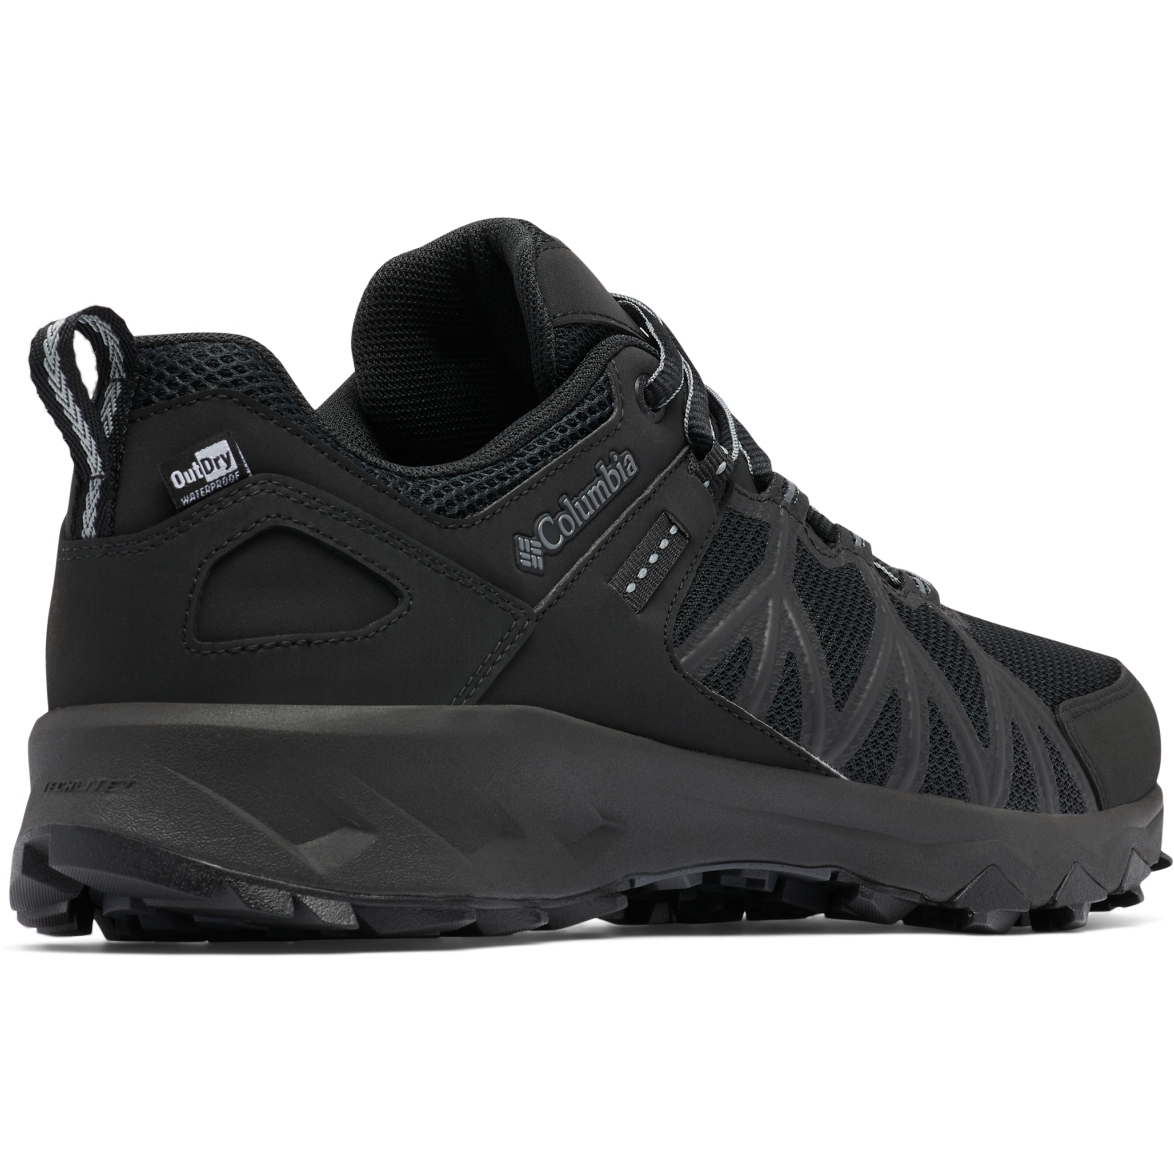 Columbia Peakfreak II Outdry Hiking Shoes Men - Black/Shark